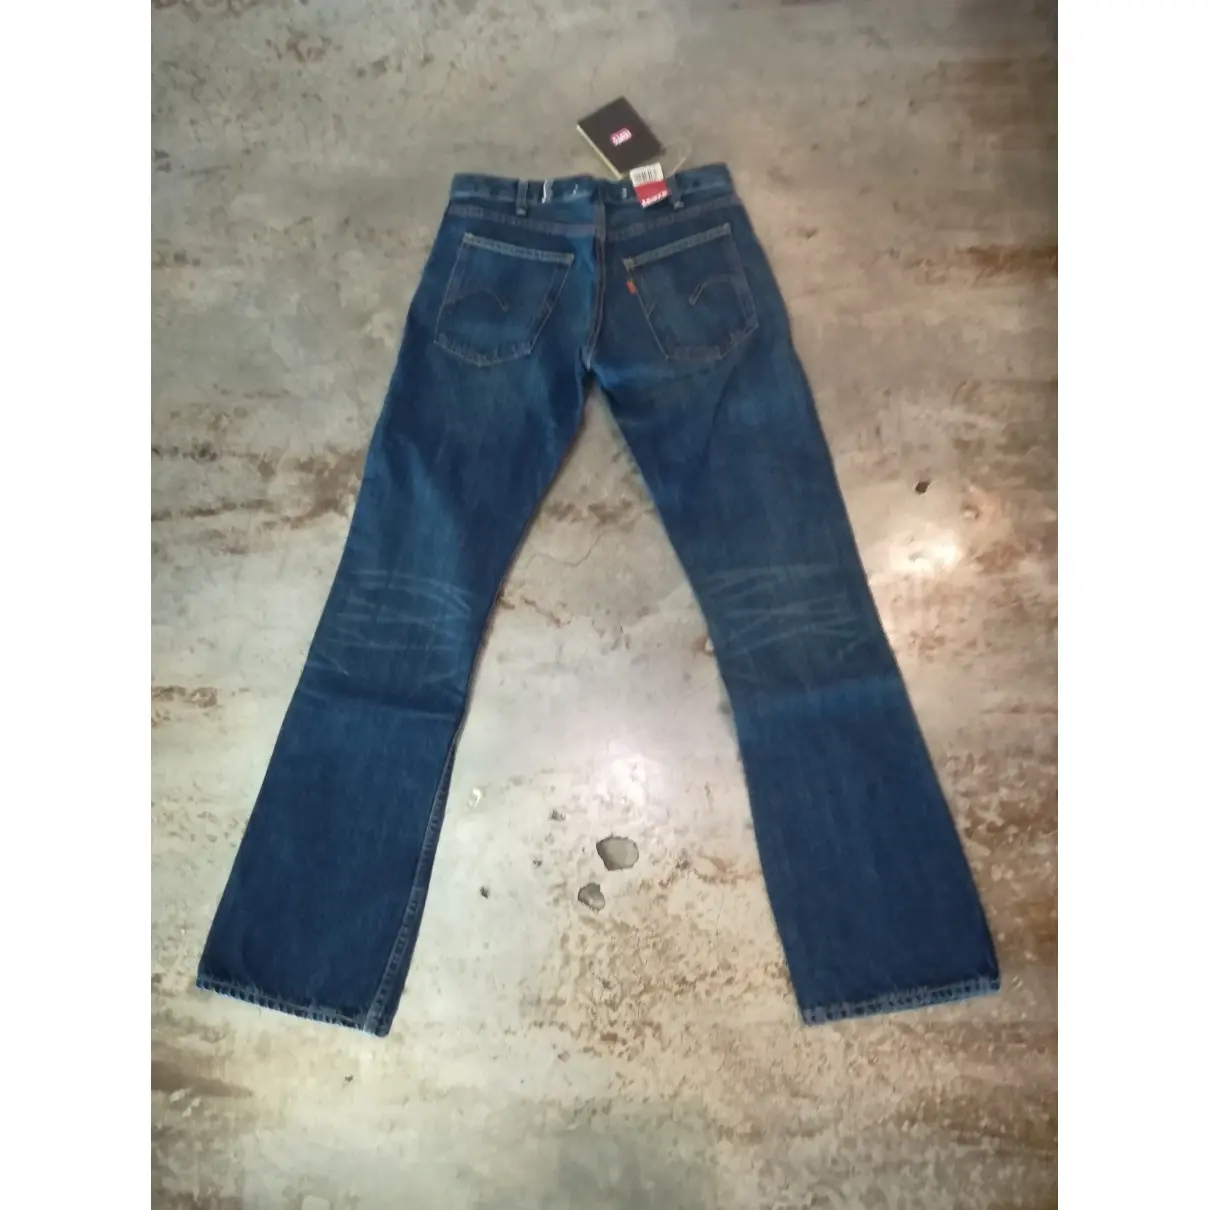 Levi's Vintage Clothing Bootcut jeans for sale